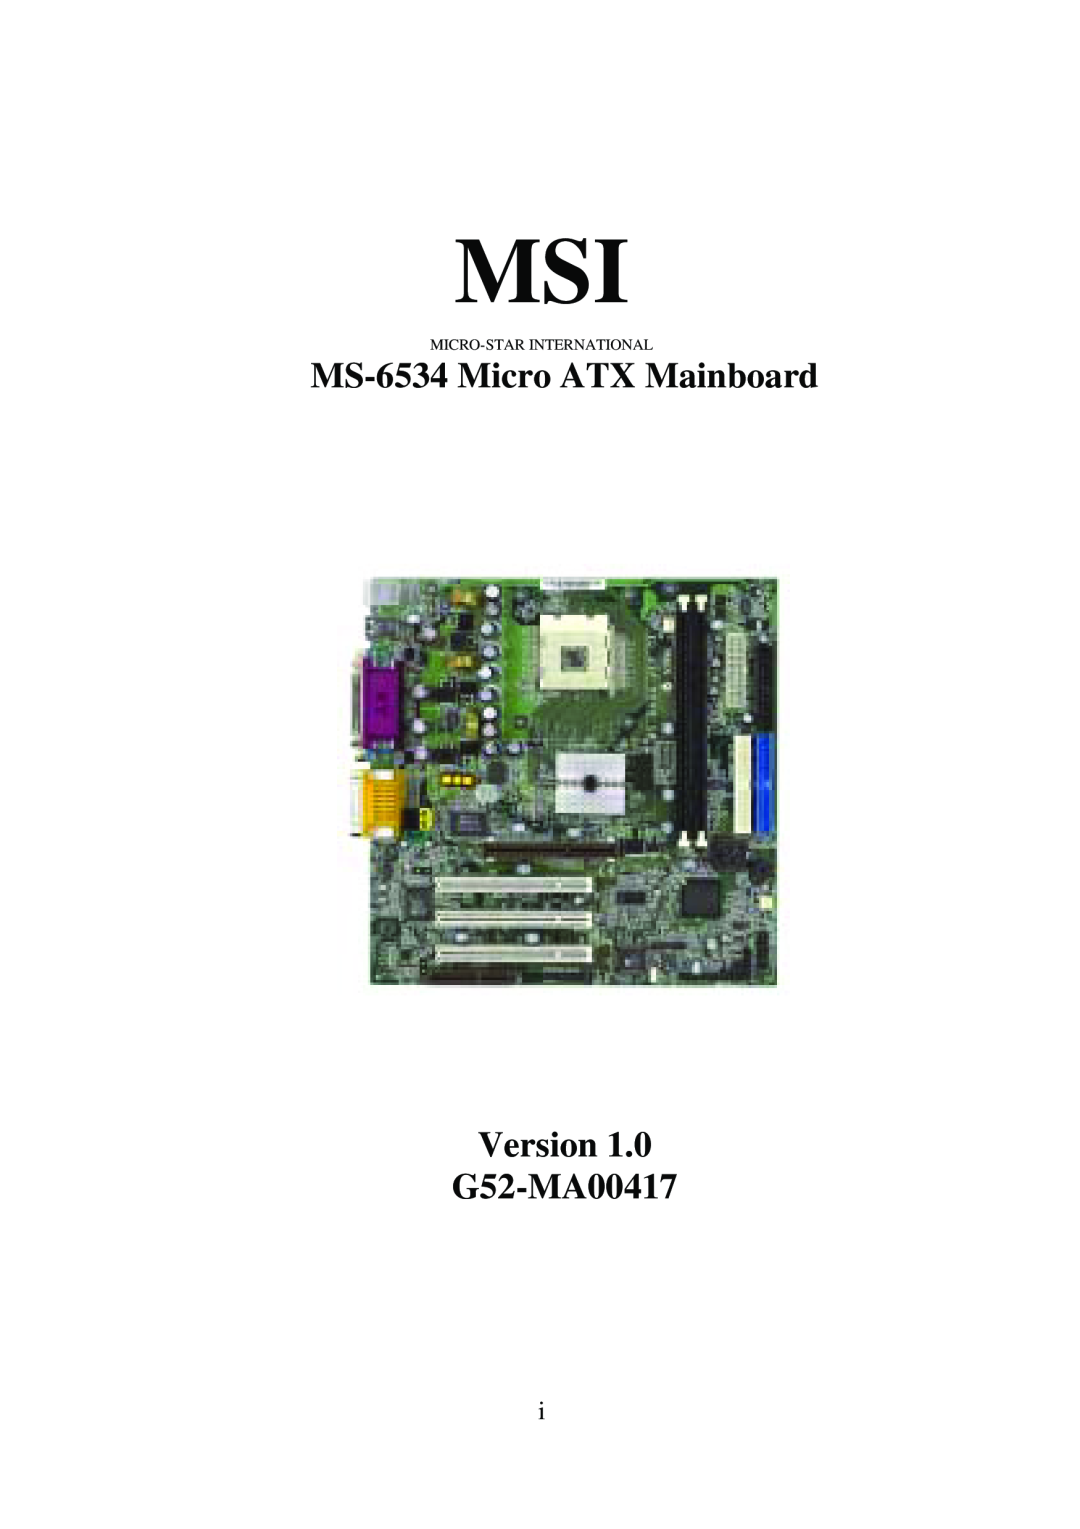 Premio Computer Aries/Centella manual MS-6534 Micro ATX Mainboard Version G52-MA00417, Micro-Star International 